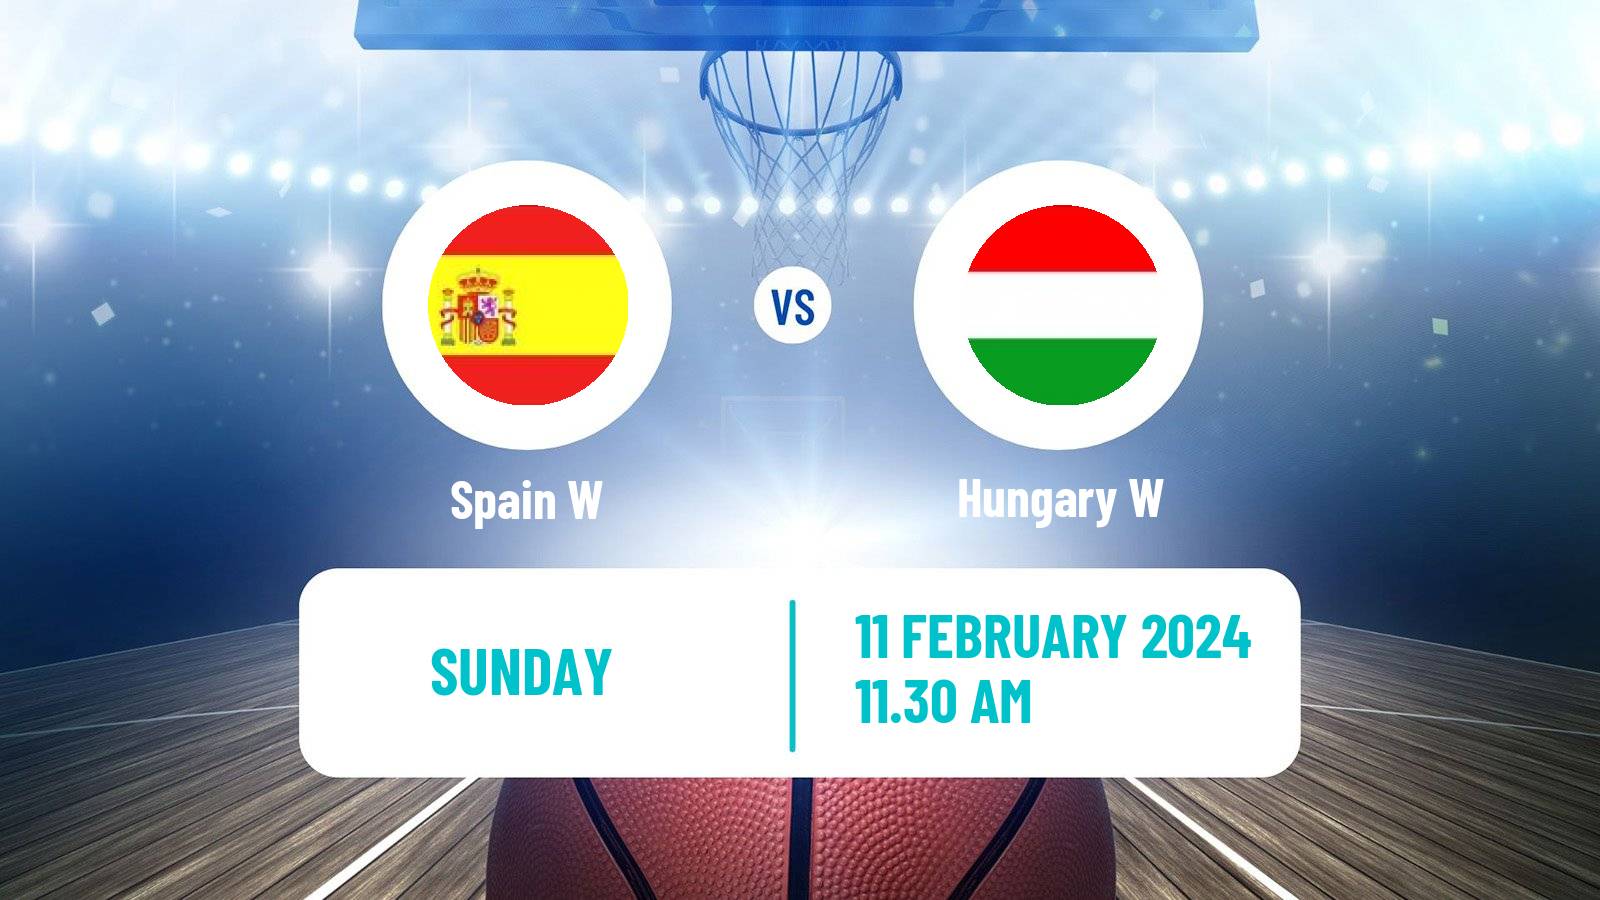 Basketball Olympic Games - Basketball Women Spain W - Hungary W